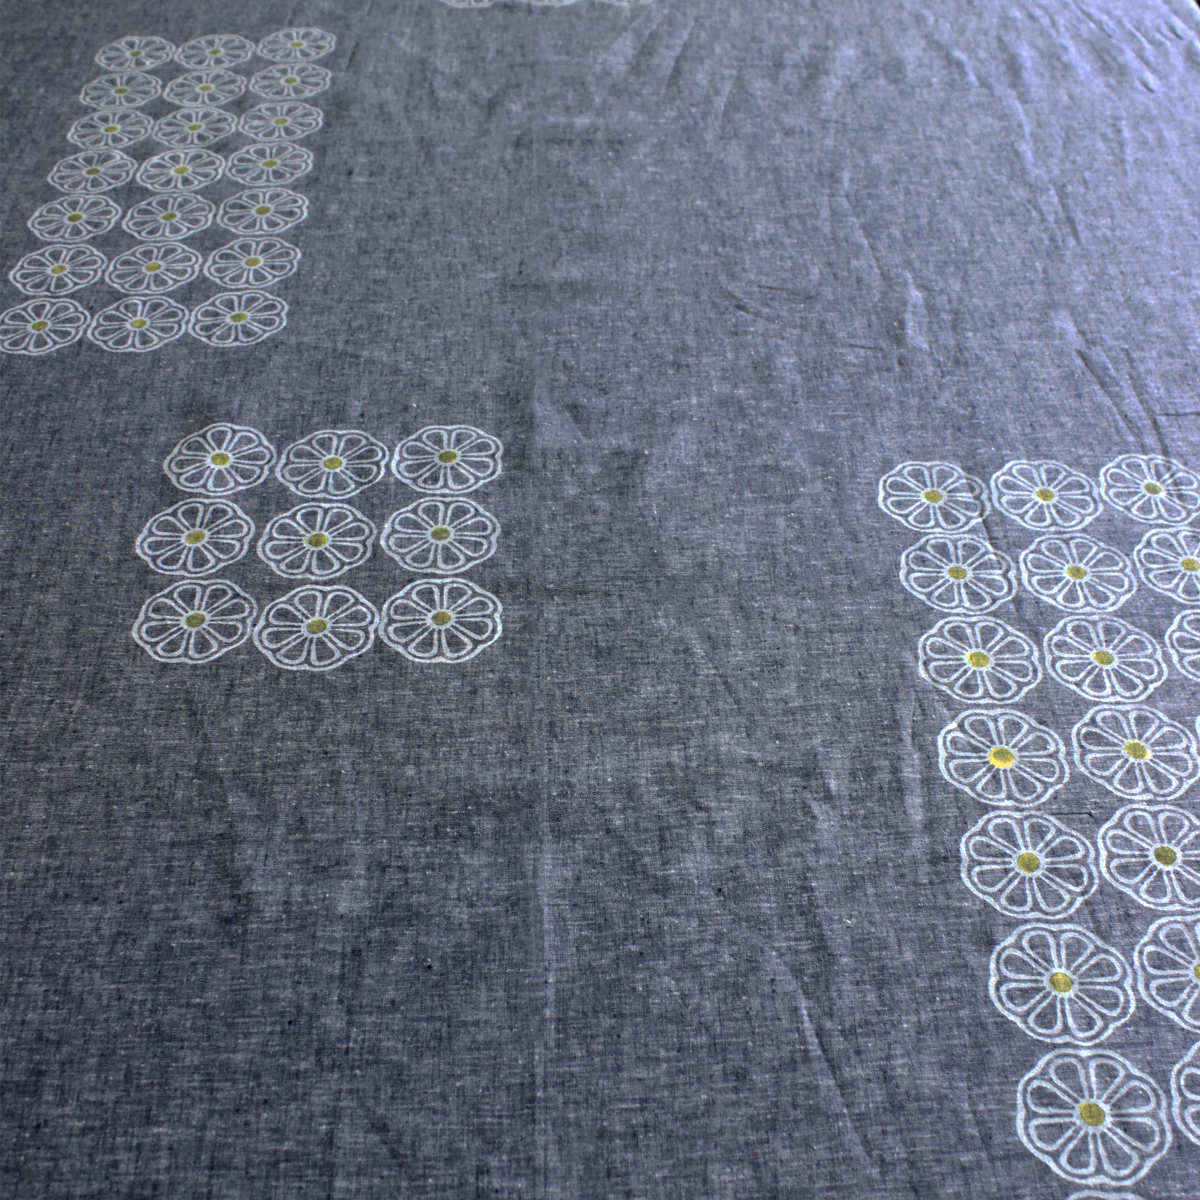 Blue Jean Block Printed Linen Tablecloth.